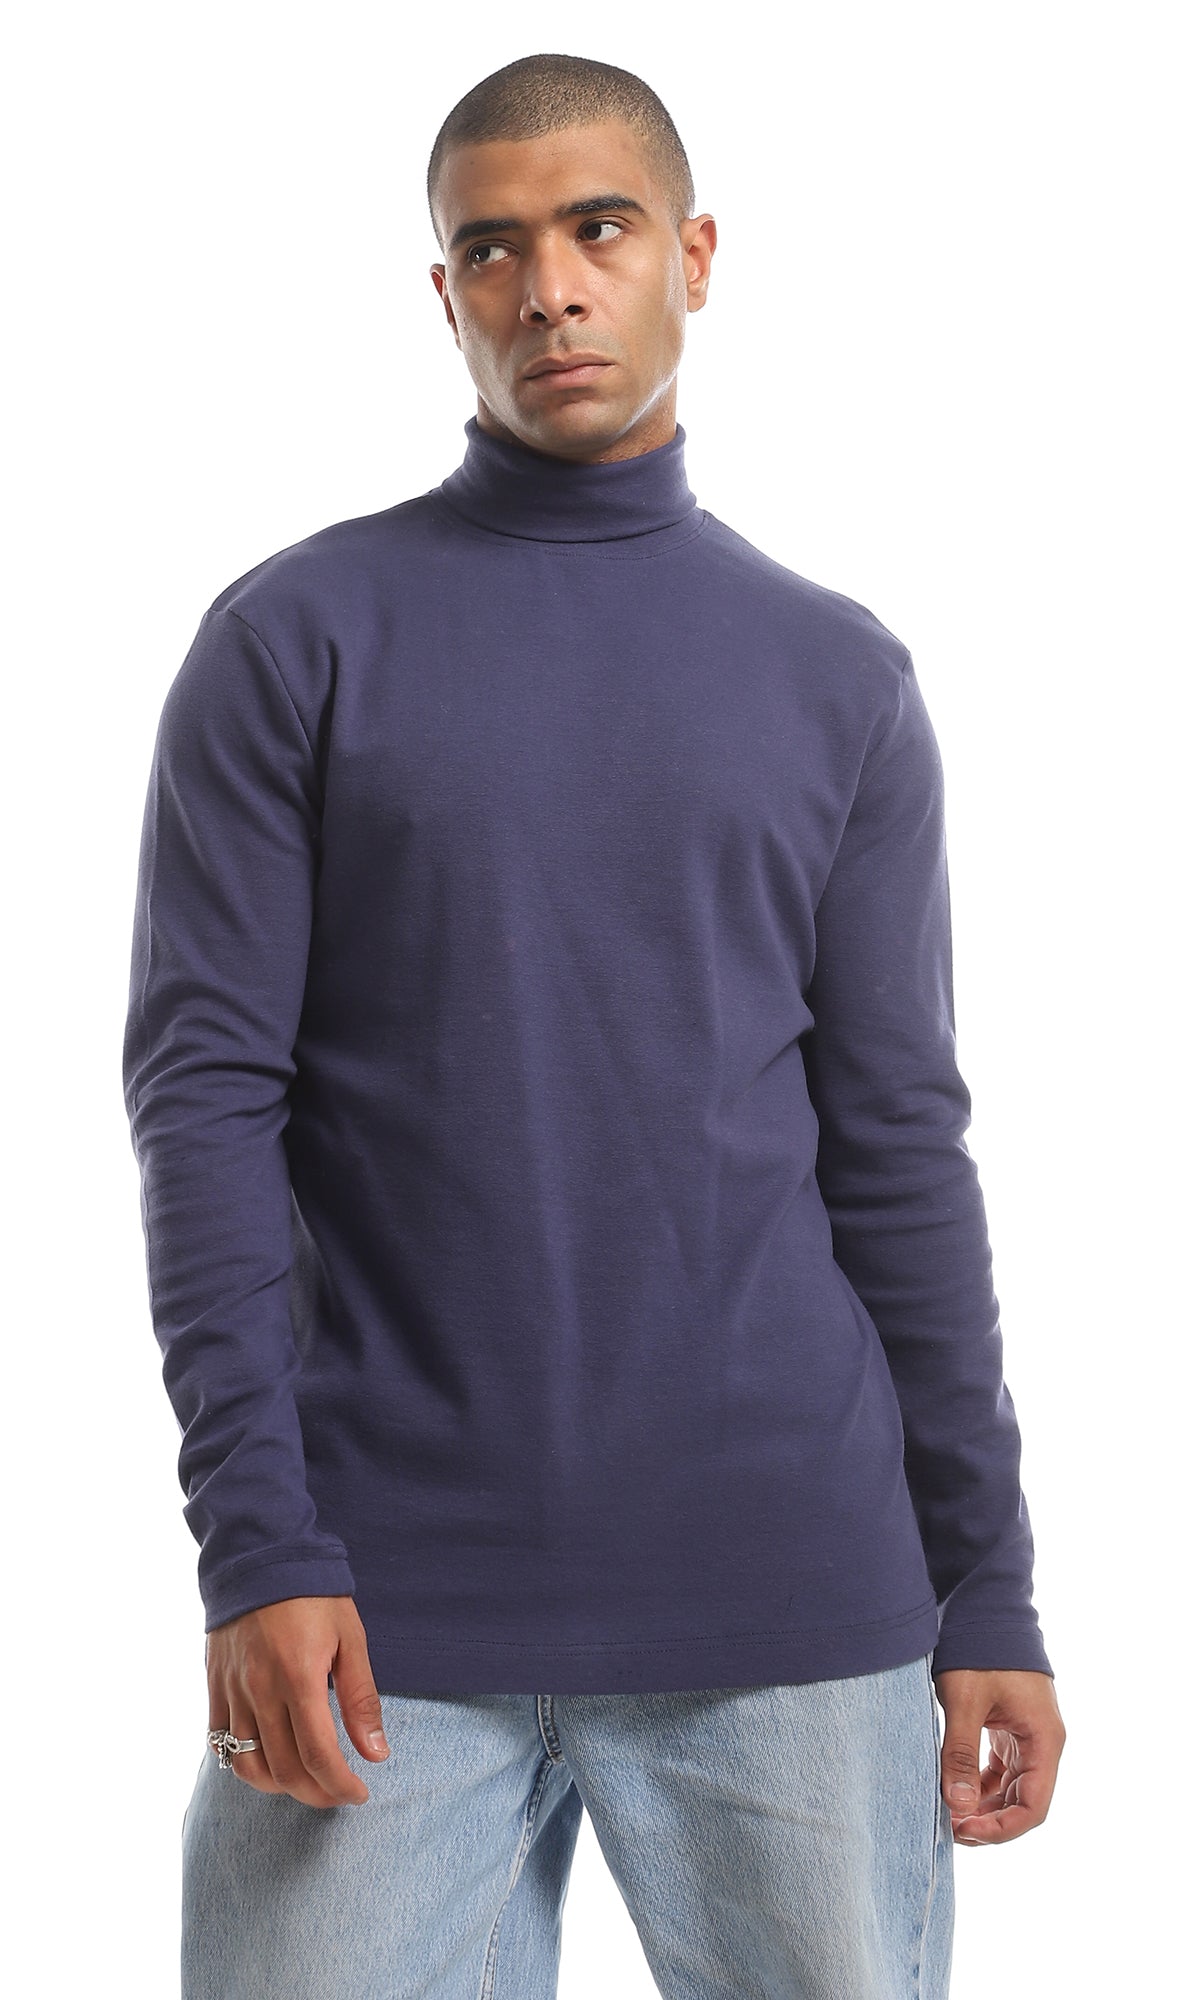 O159799 High Neck Long Sleeved Basic Cotton T-Shirt - Navy Blue